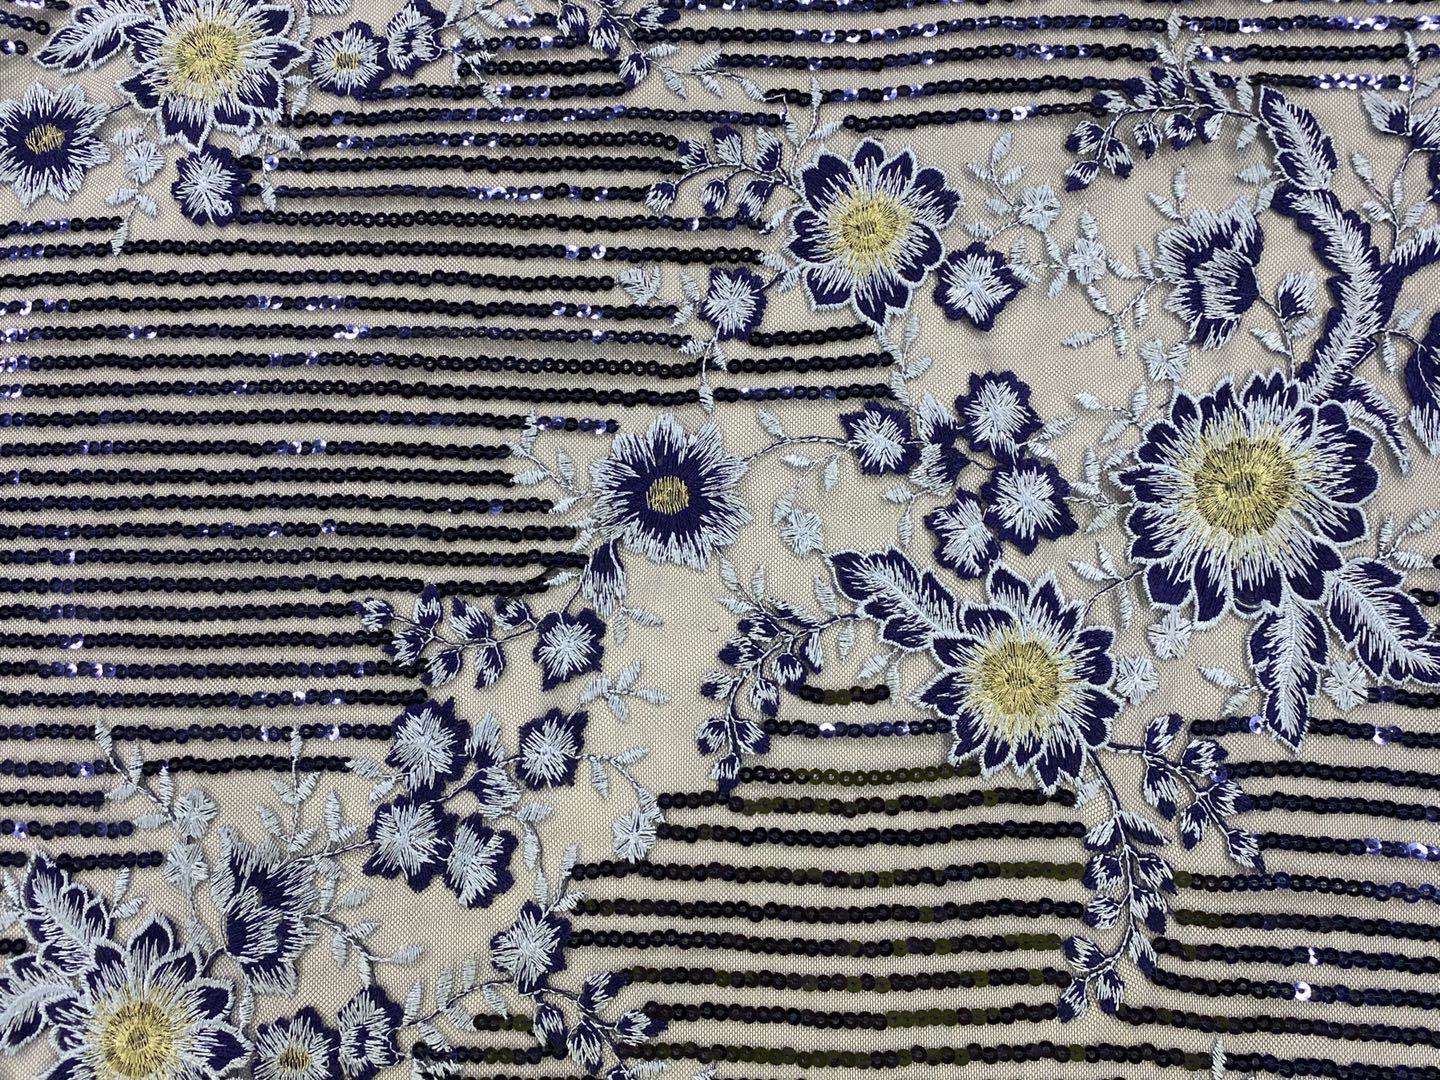 Metallic /Shiny Poly Yarn Navy Sequin Embroidery Fabric